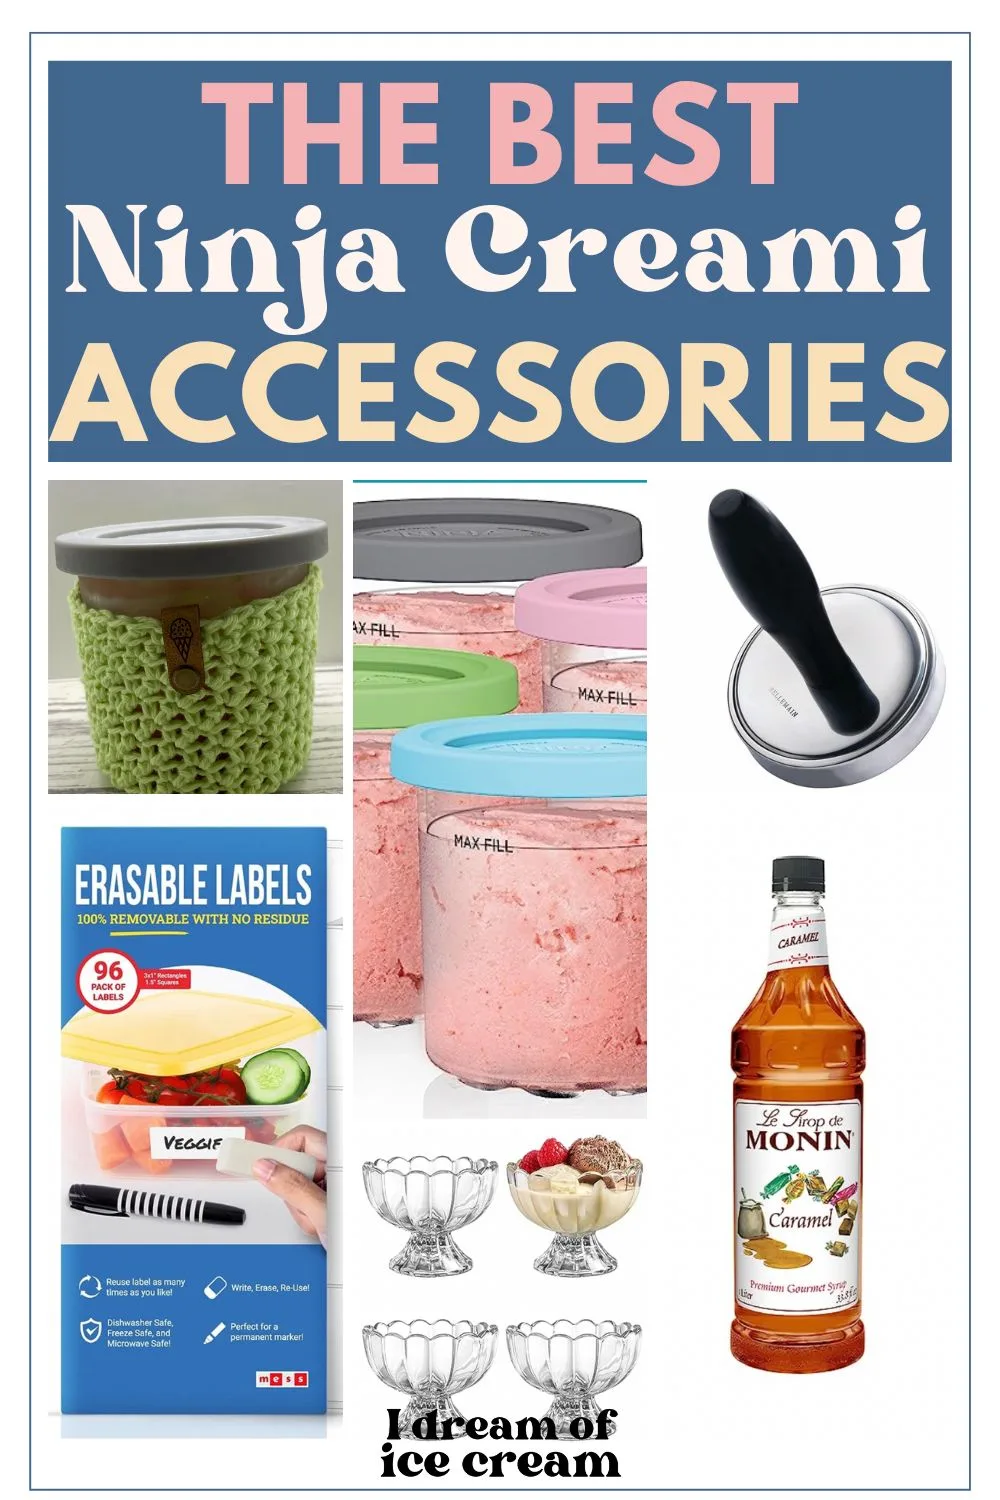 Top 10 Ninja Creami Accessories You Need - I Dream of Ice Cream